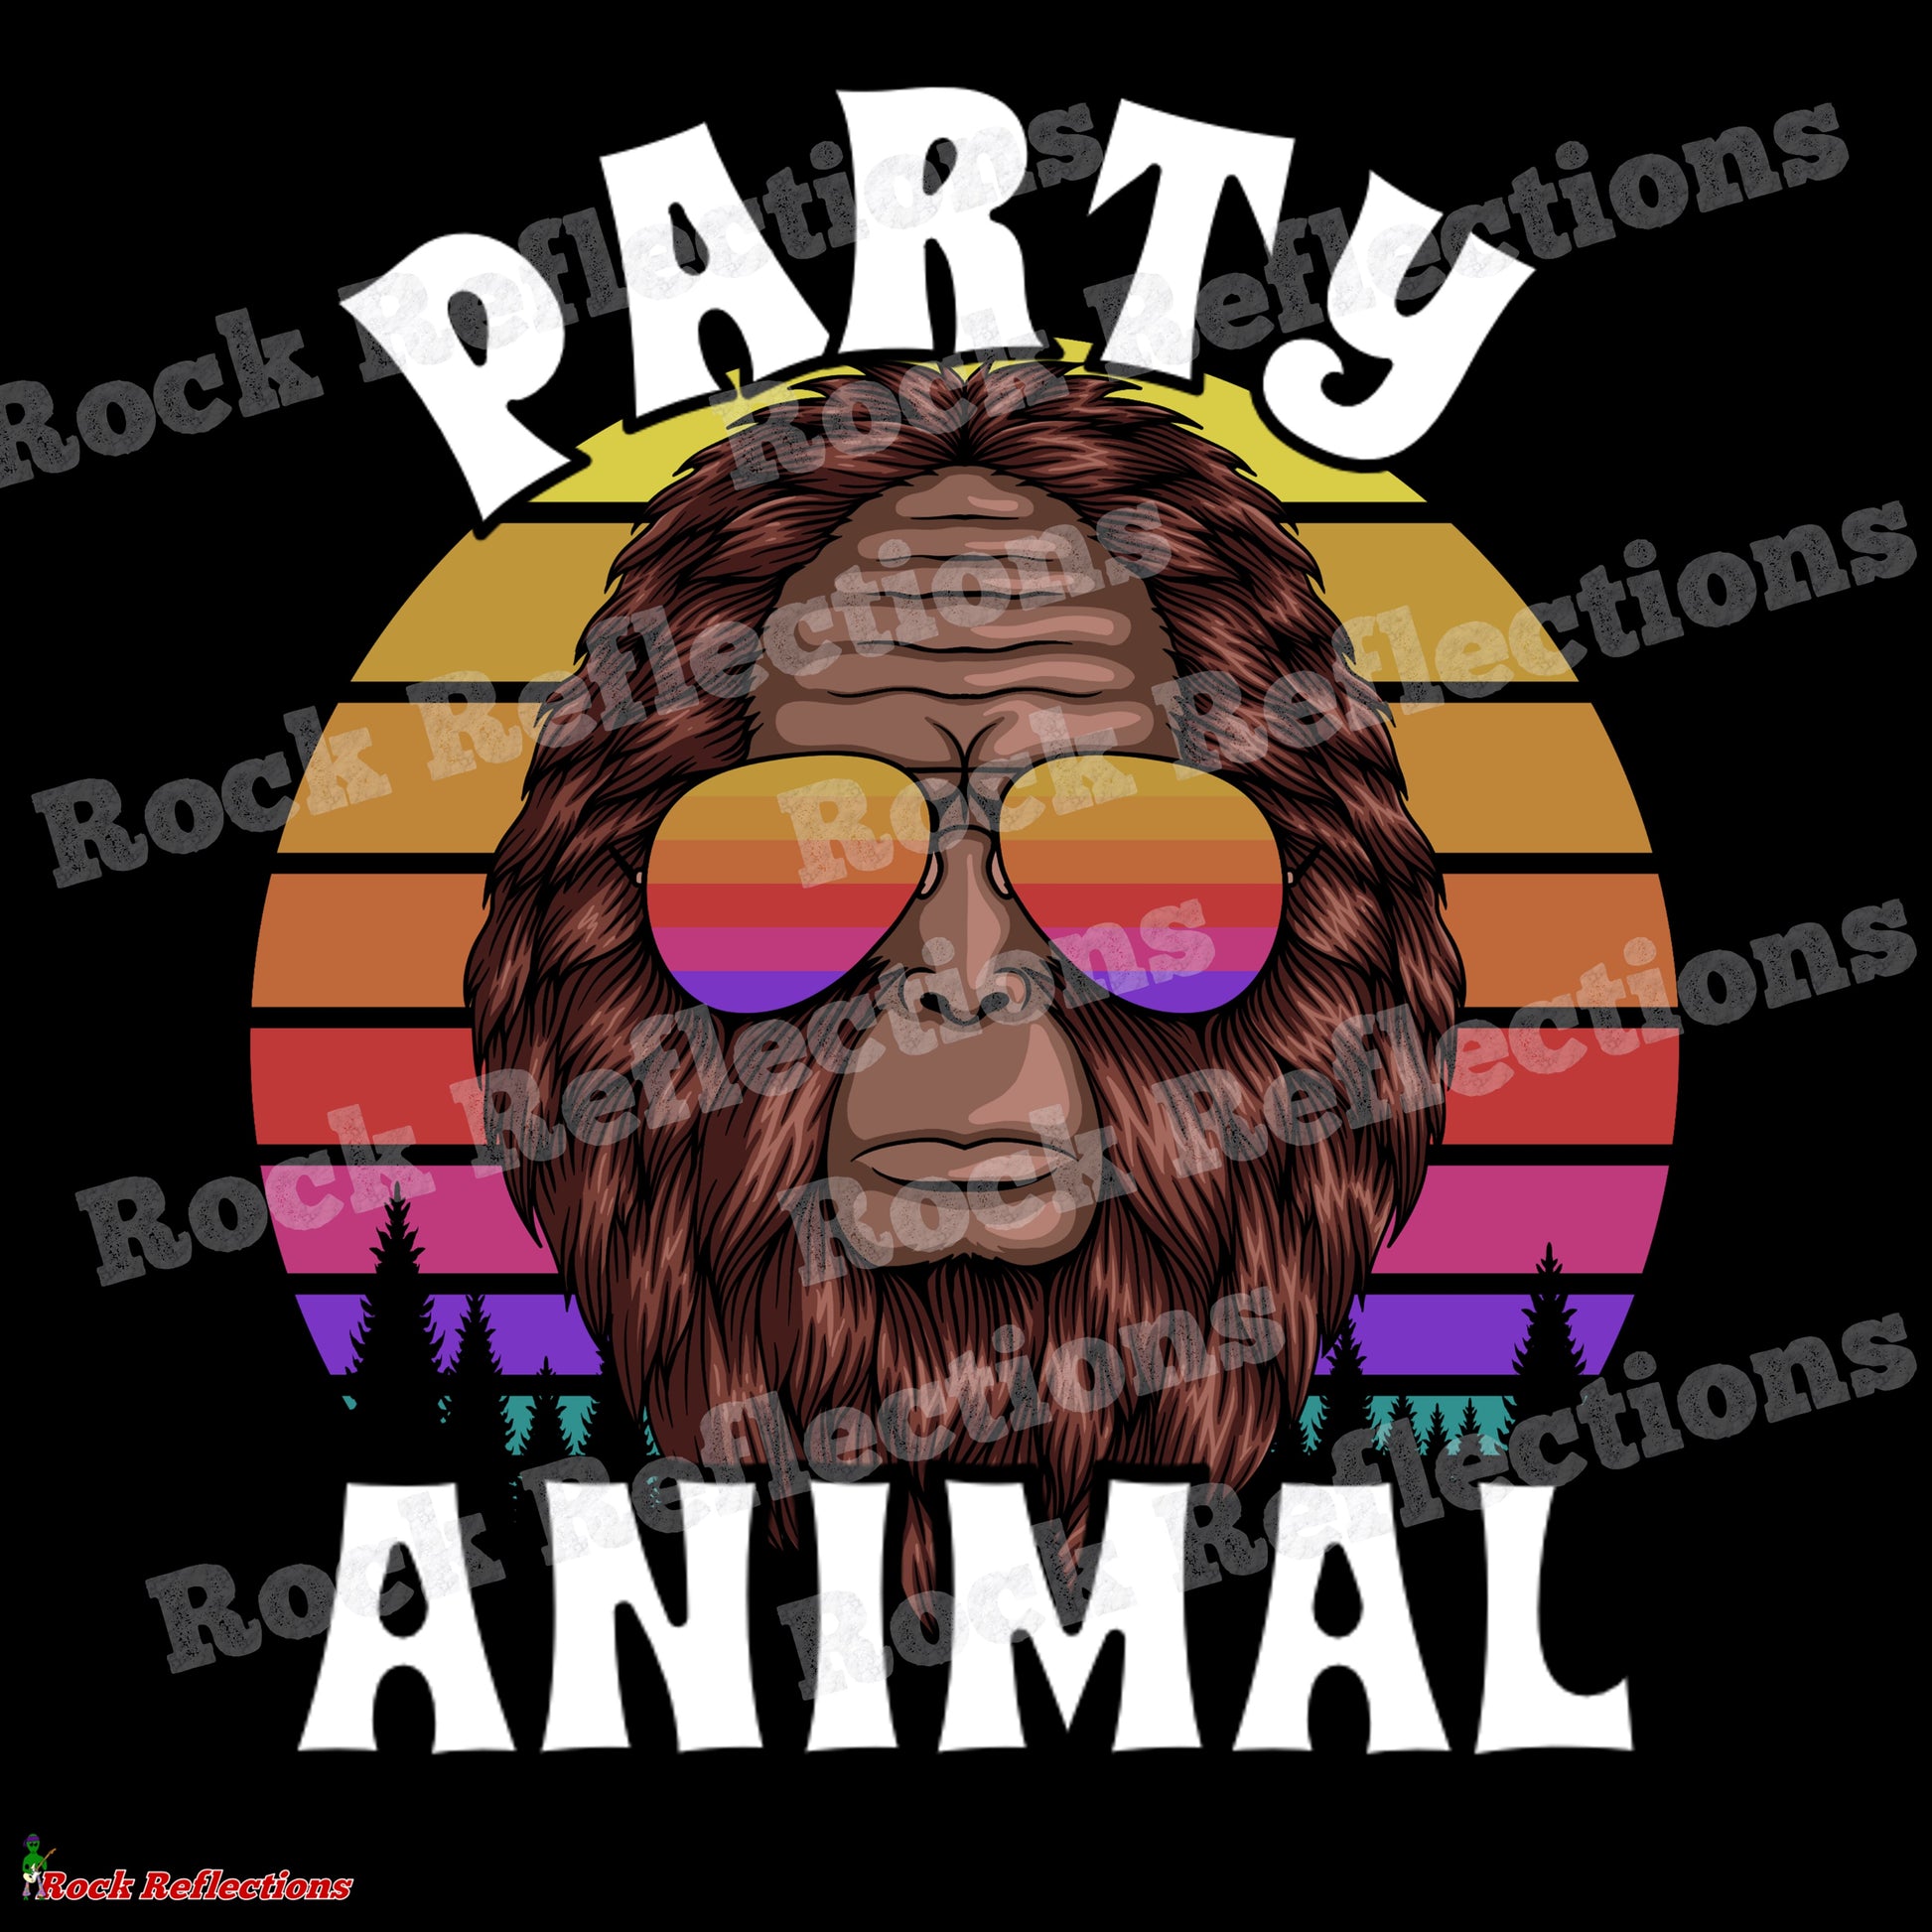 Bigfoot Party Animal Black Mug CustomCat